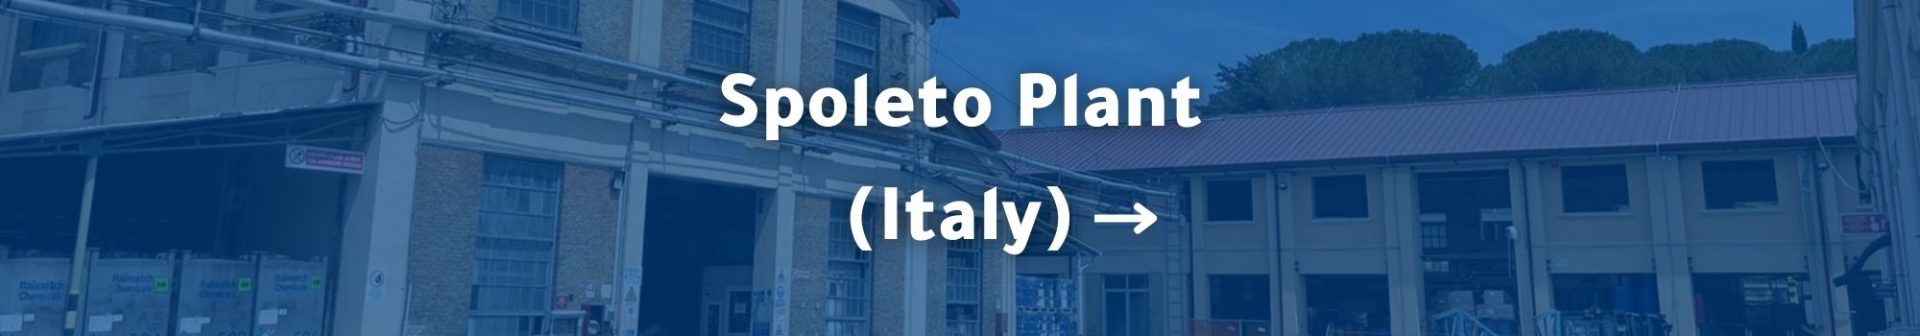 Spoleto_Italmatch_banner